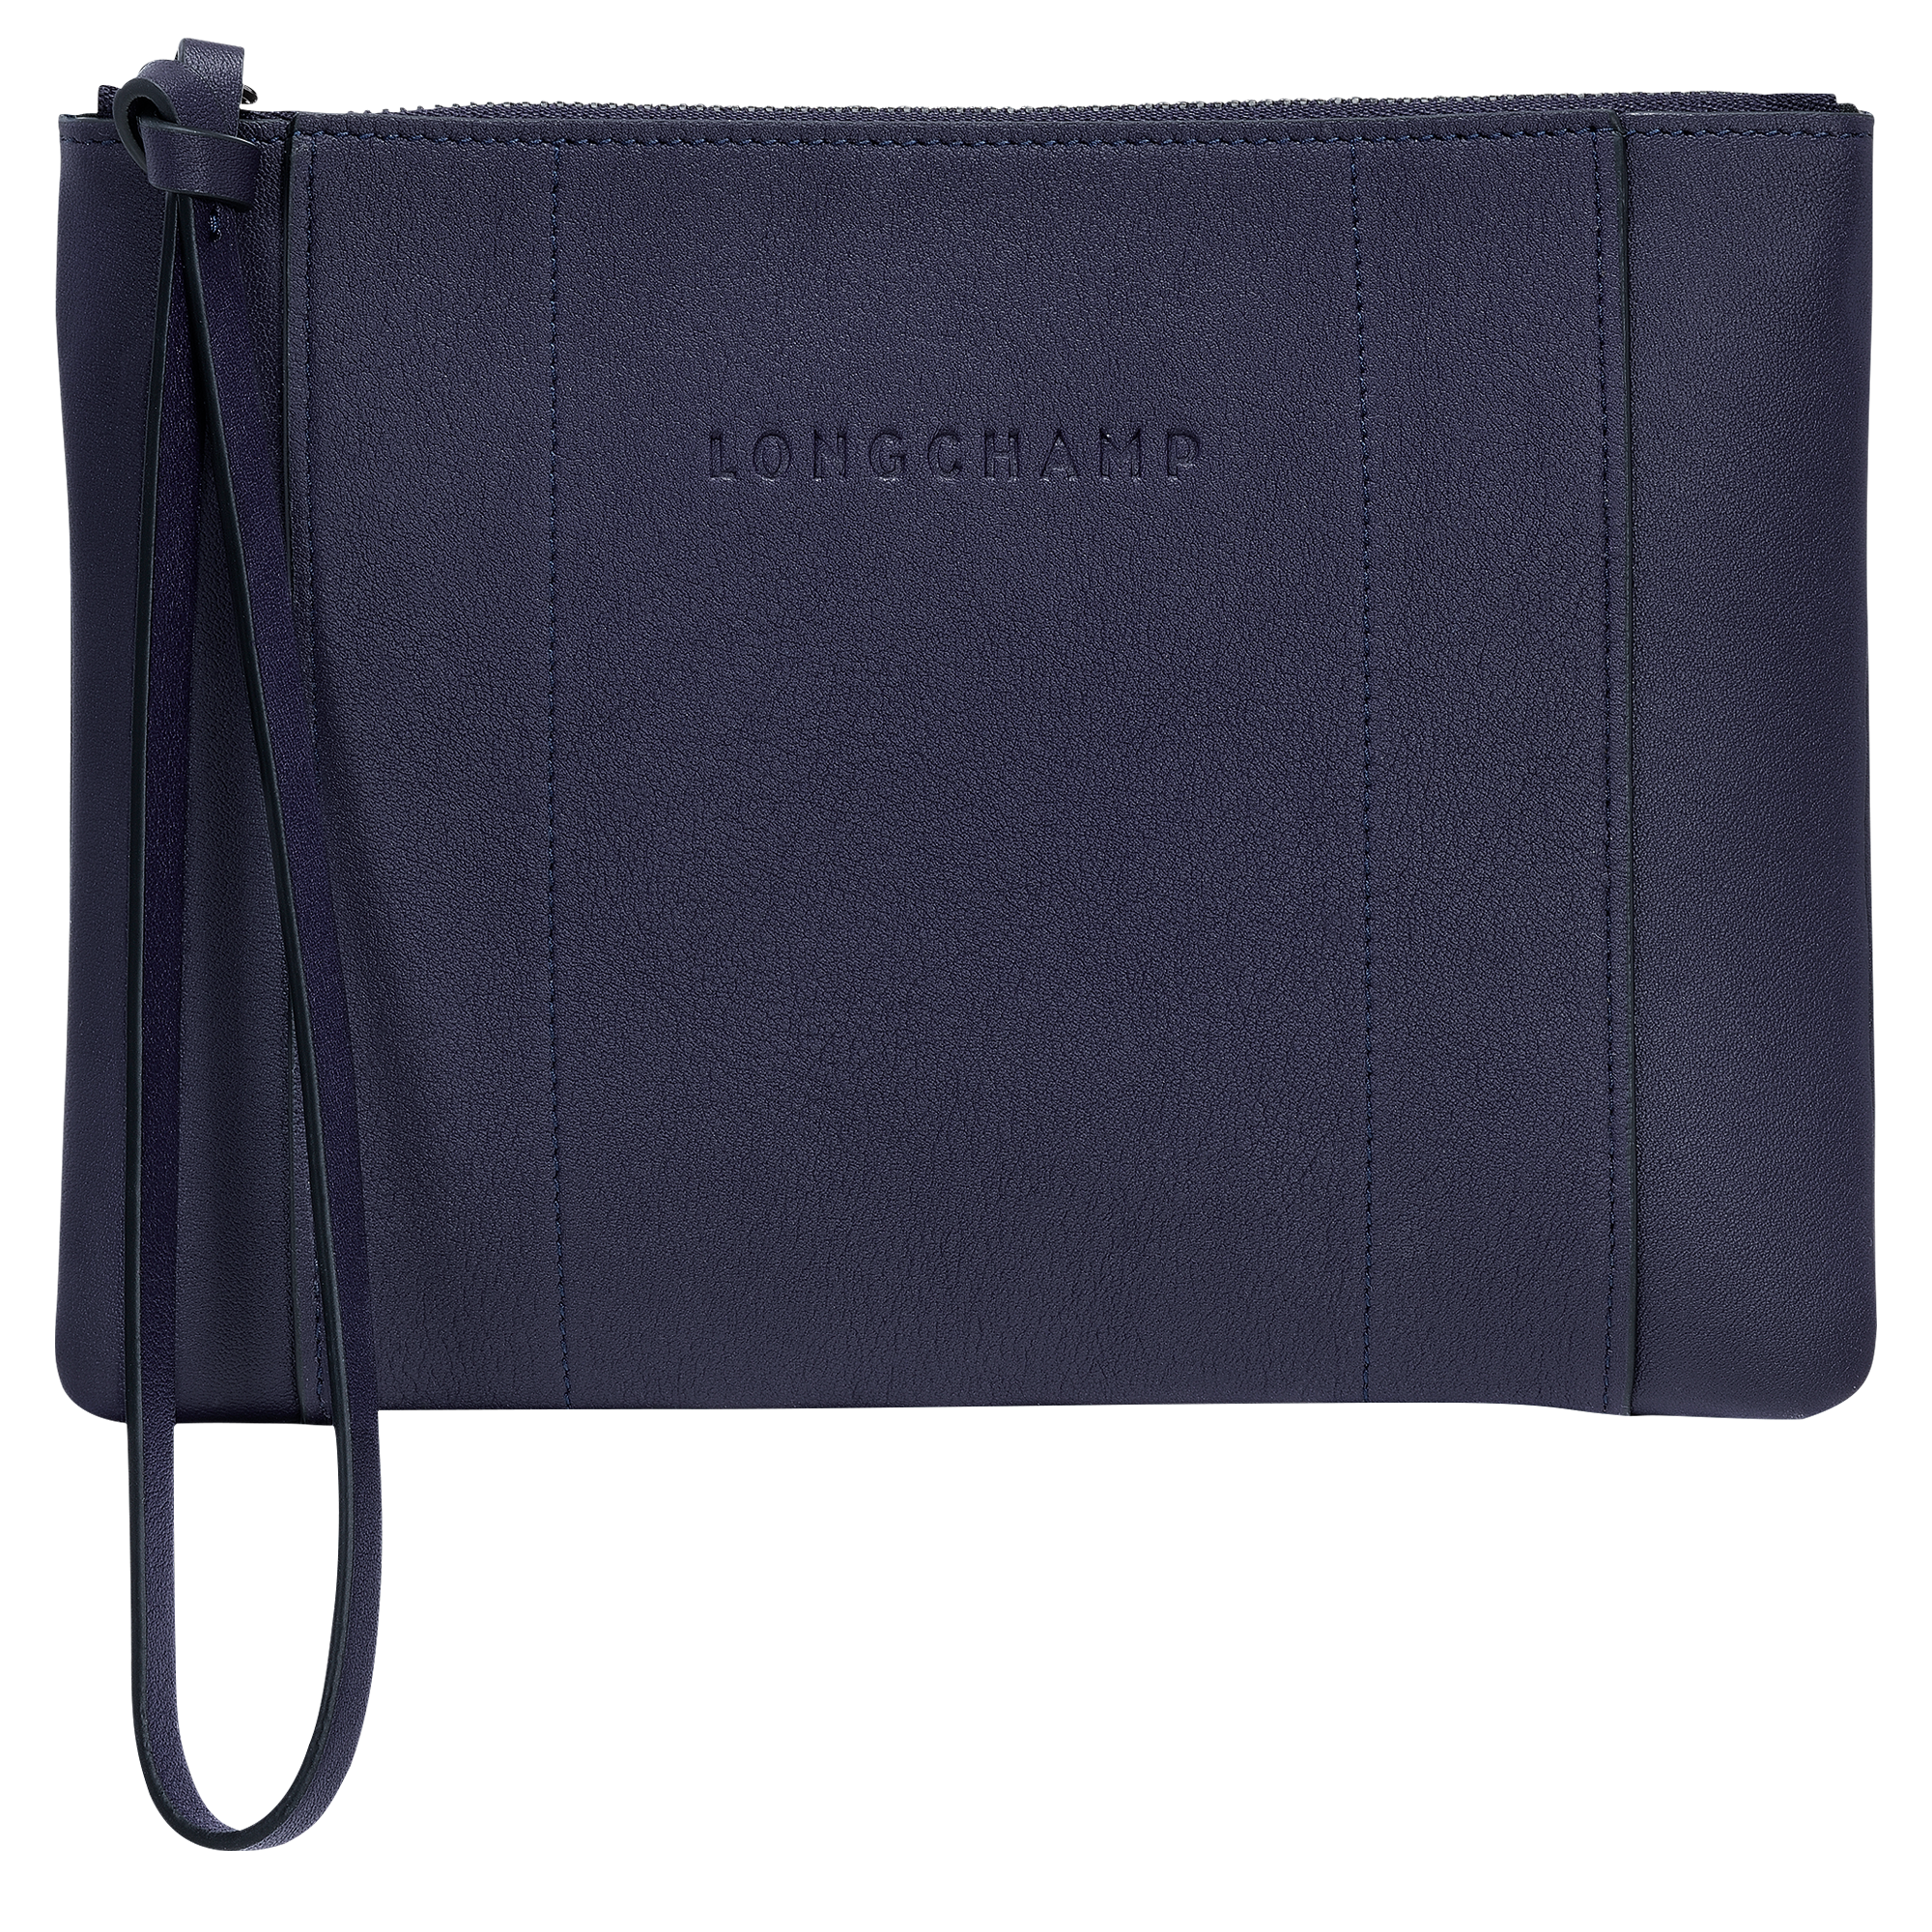 Longchamp, a luxury French brand | Longchamp